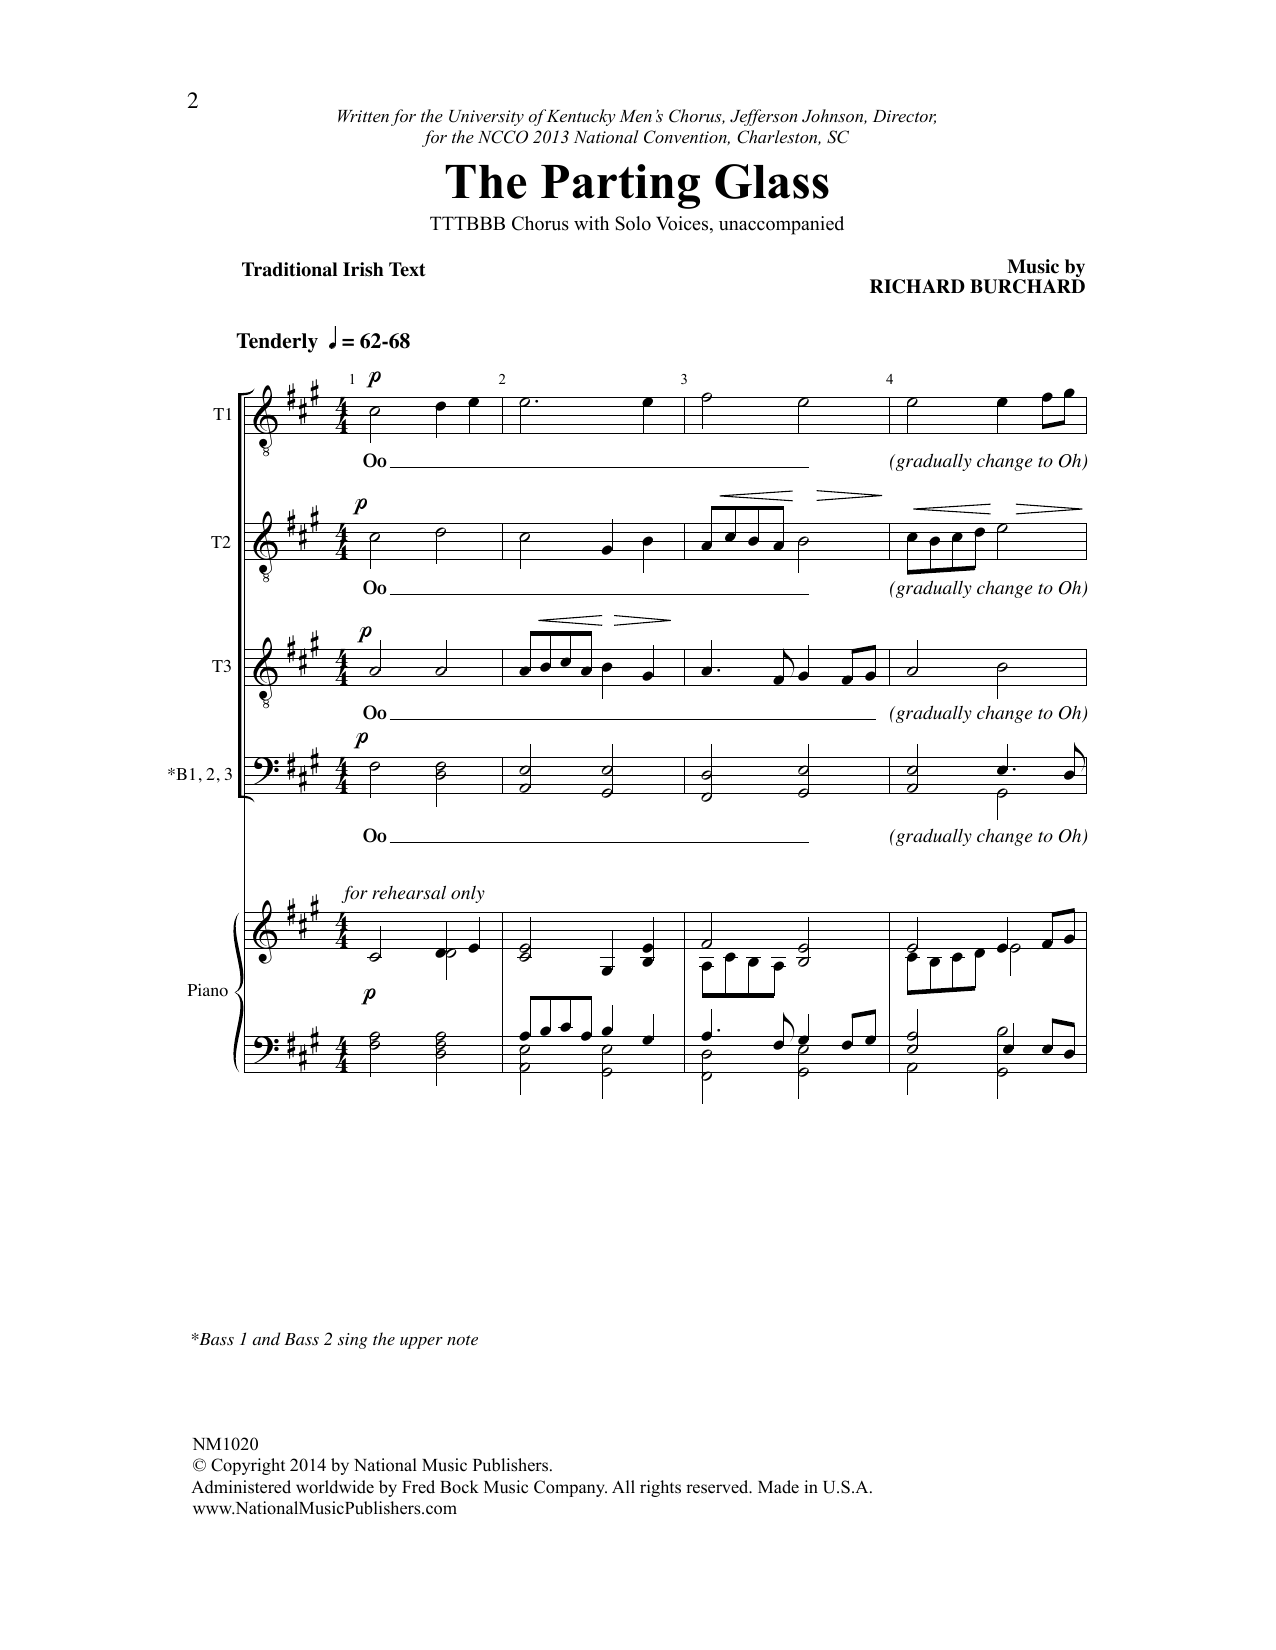 Download Richard Burchard The Parting Glass Sheet Music